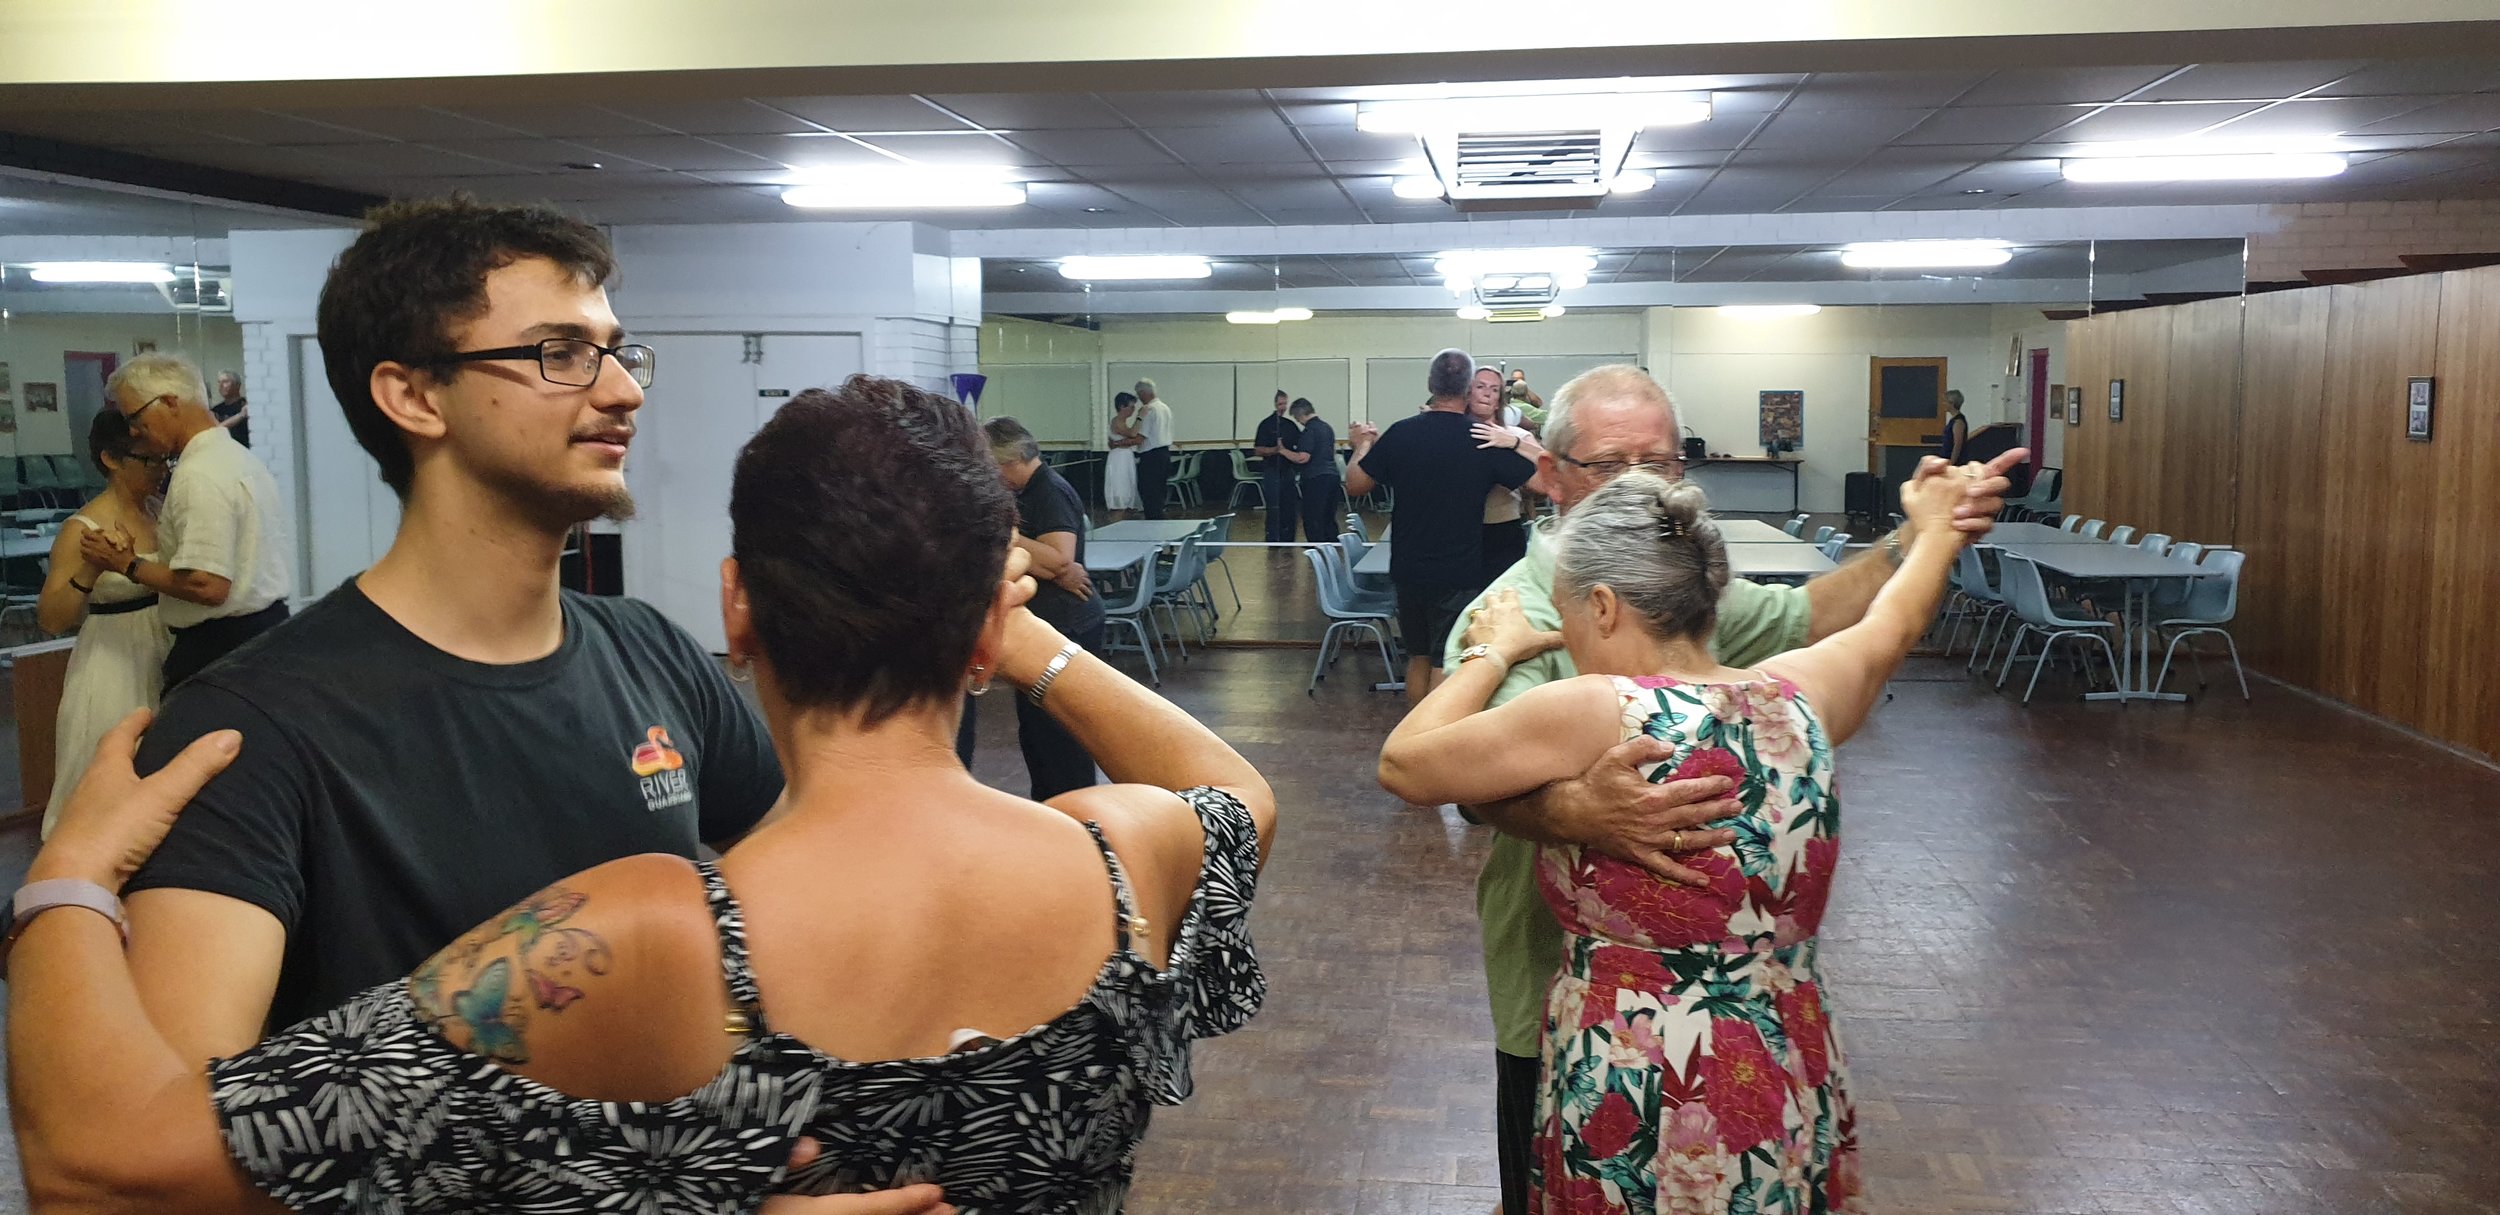 chisholm dance_adult beginners dance classes_wangarra(1).jpg